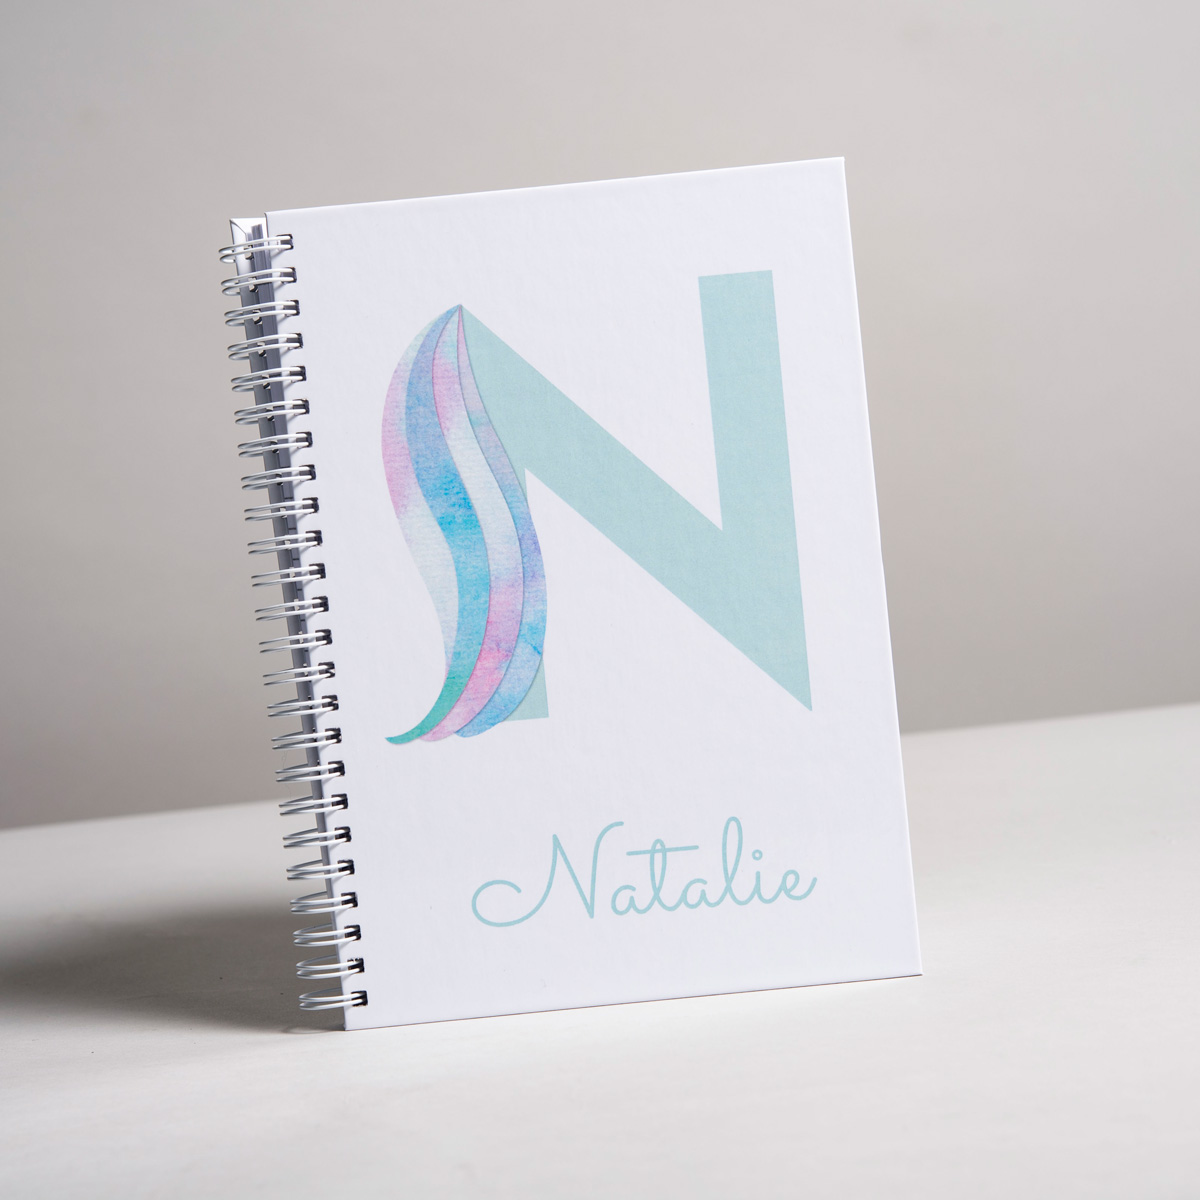 Personalised Notebook - Unicorn Tail